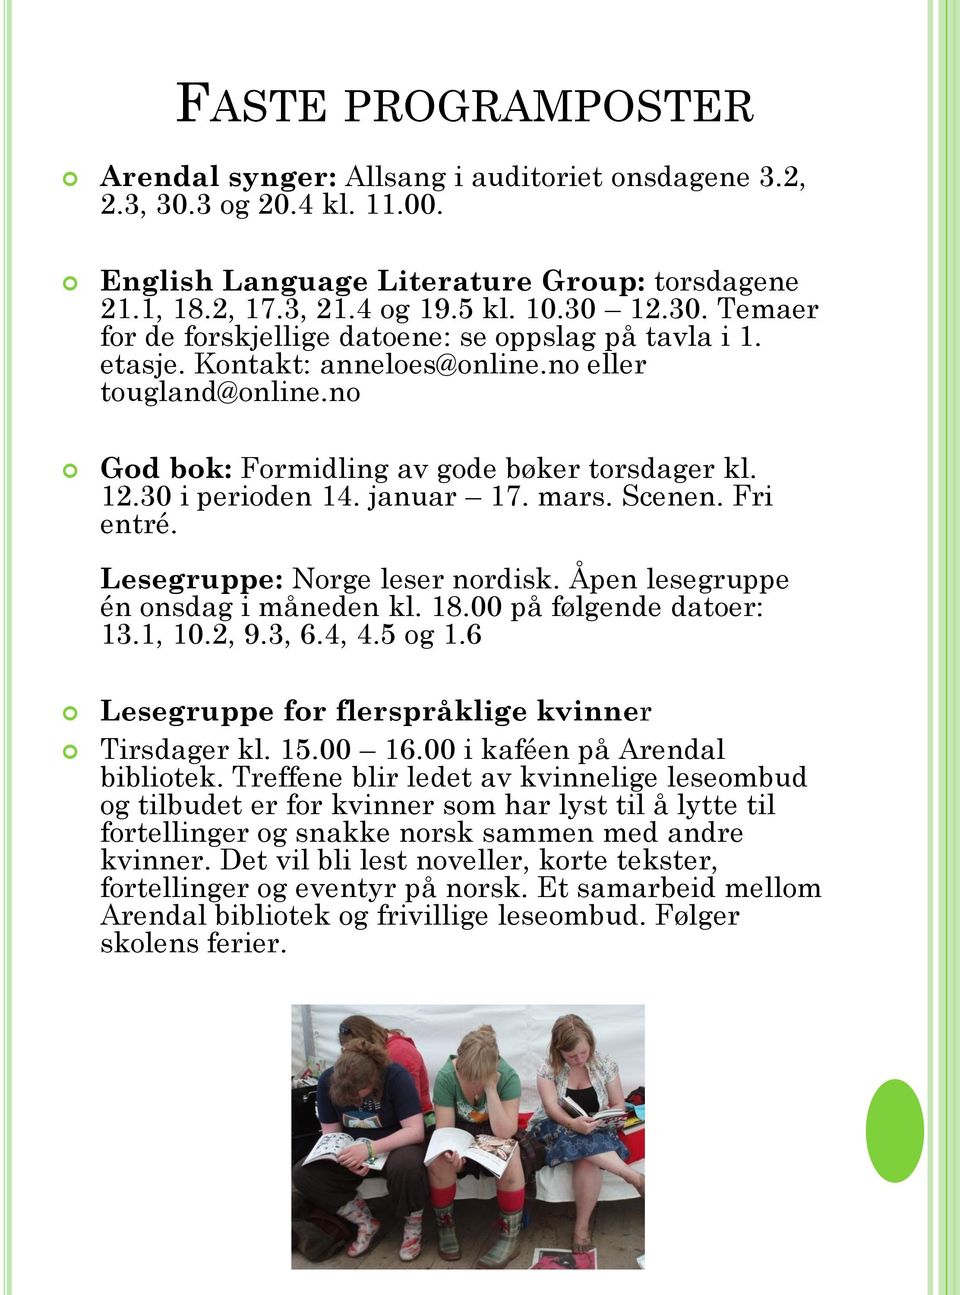 Åpen lesegruppe én onsdag i måneden kl. 18.00 på følgende datoer: 13.1, 10.2, 9.3, 6.4, 4.5 og 1.6 Lesegruppe for flerspråklige kvinner Tirsdager kl. 15.00 16.00 i kaféen på Arendal bibliotek.